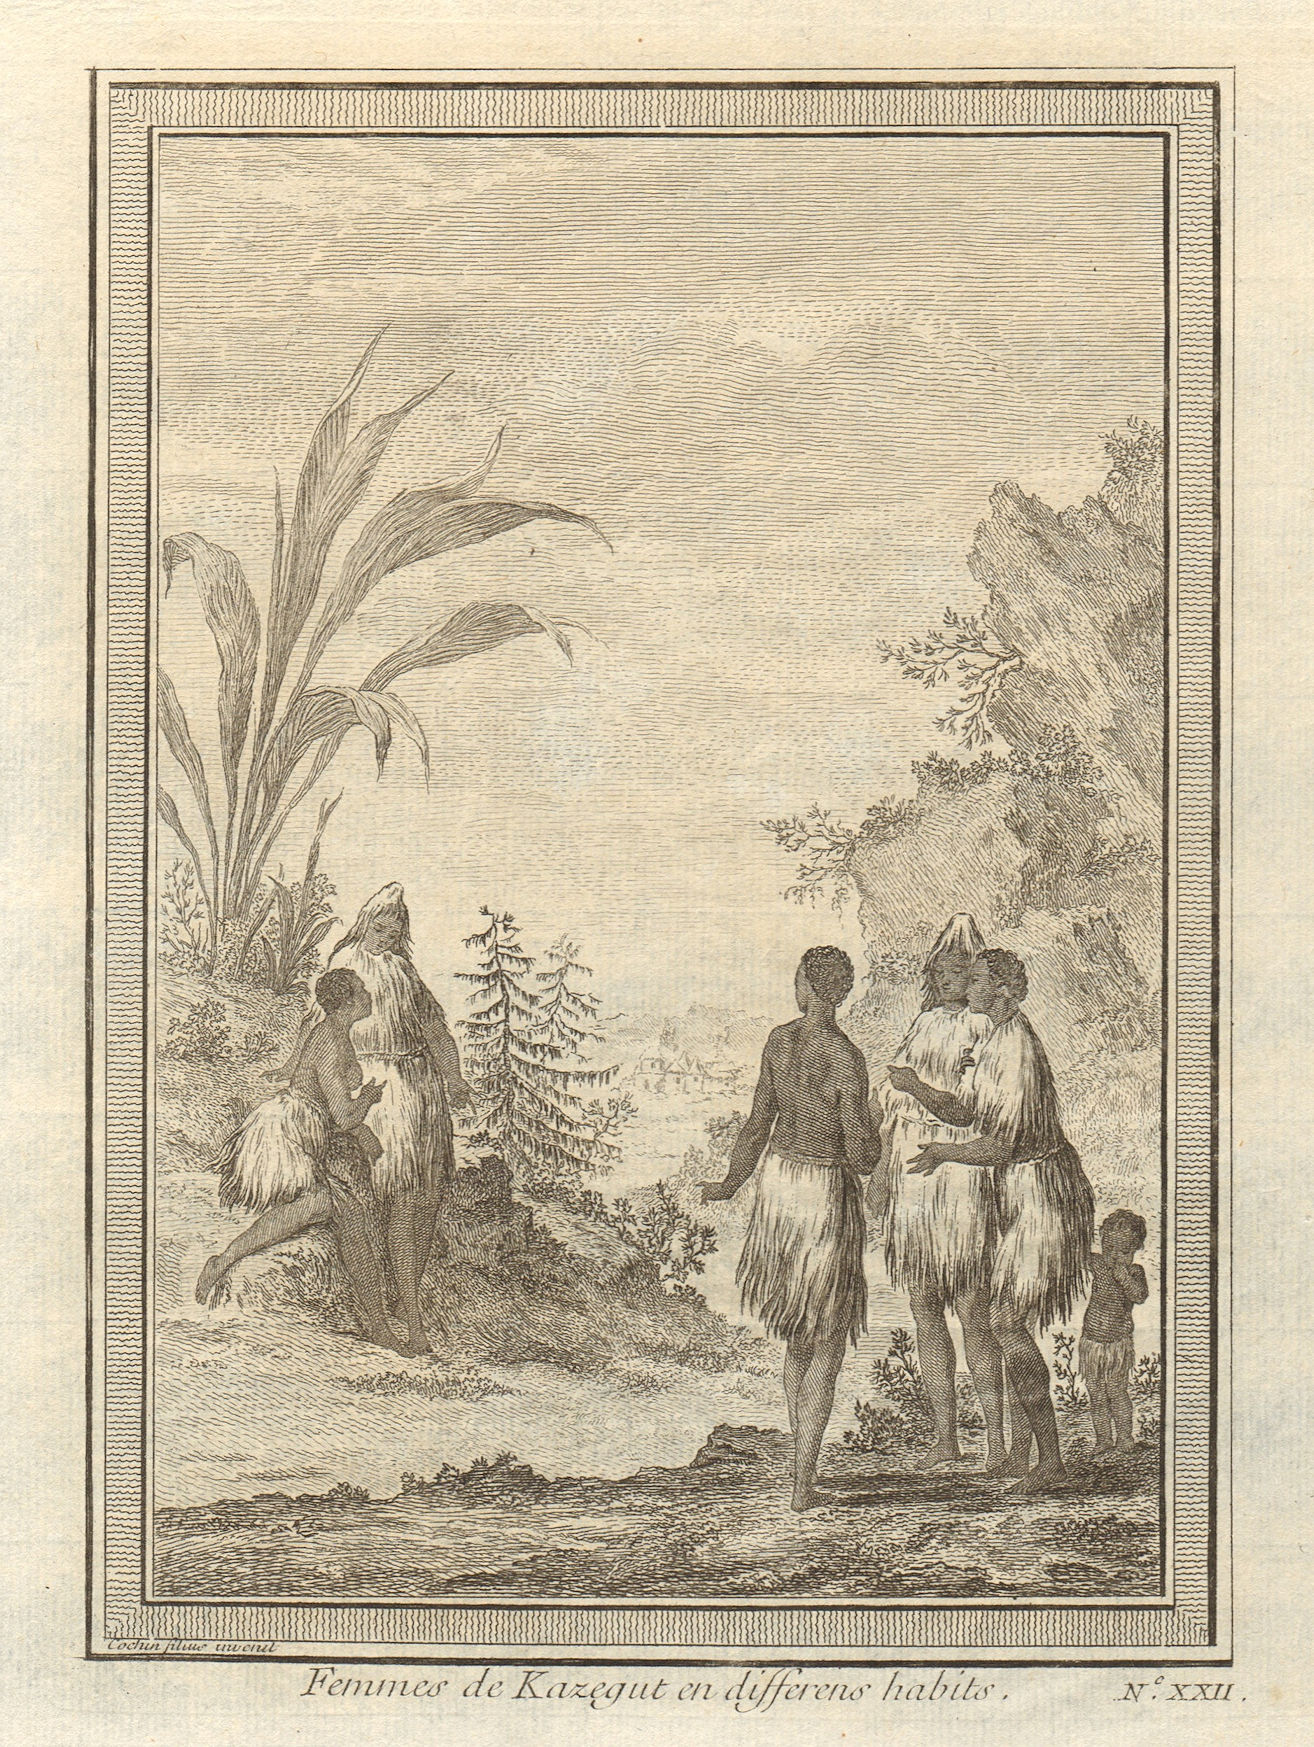 Associate Product Guinea-Bissau. Kazegut women. Galinhas island, Bissagos archipelago 1746 print